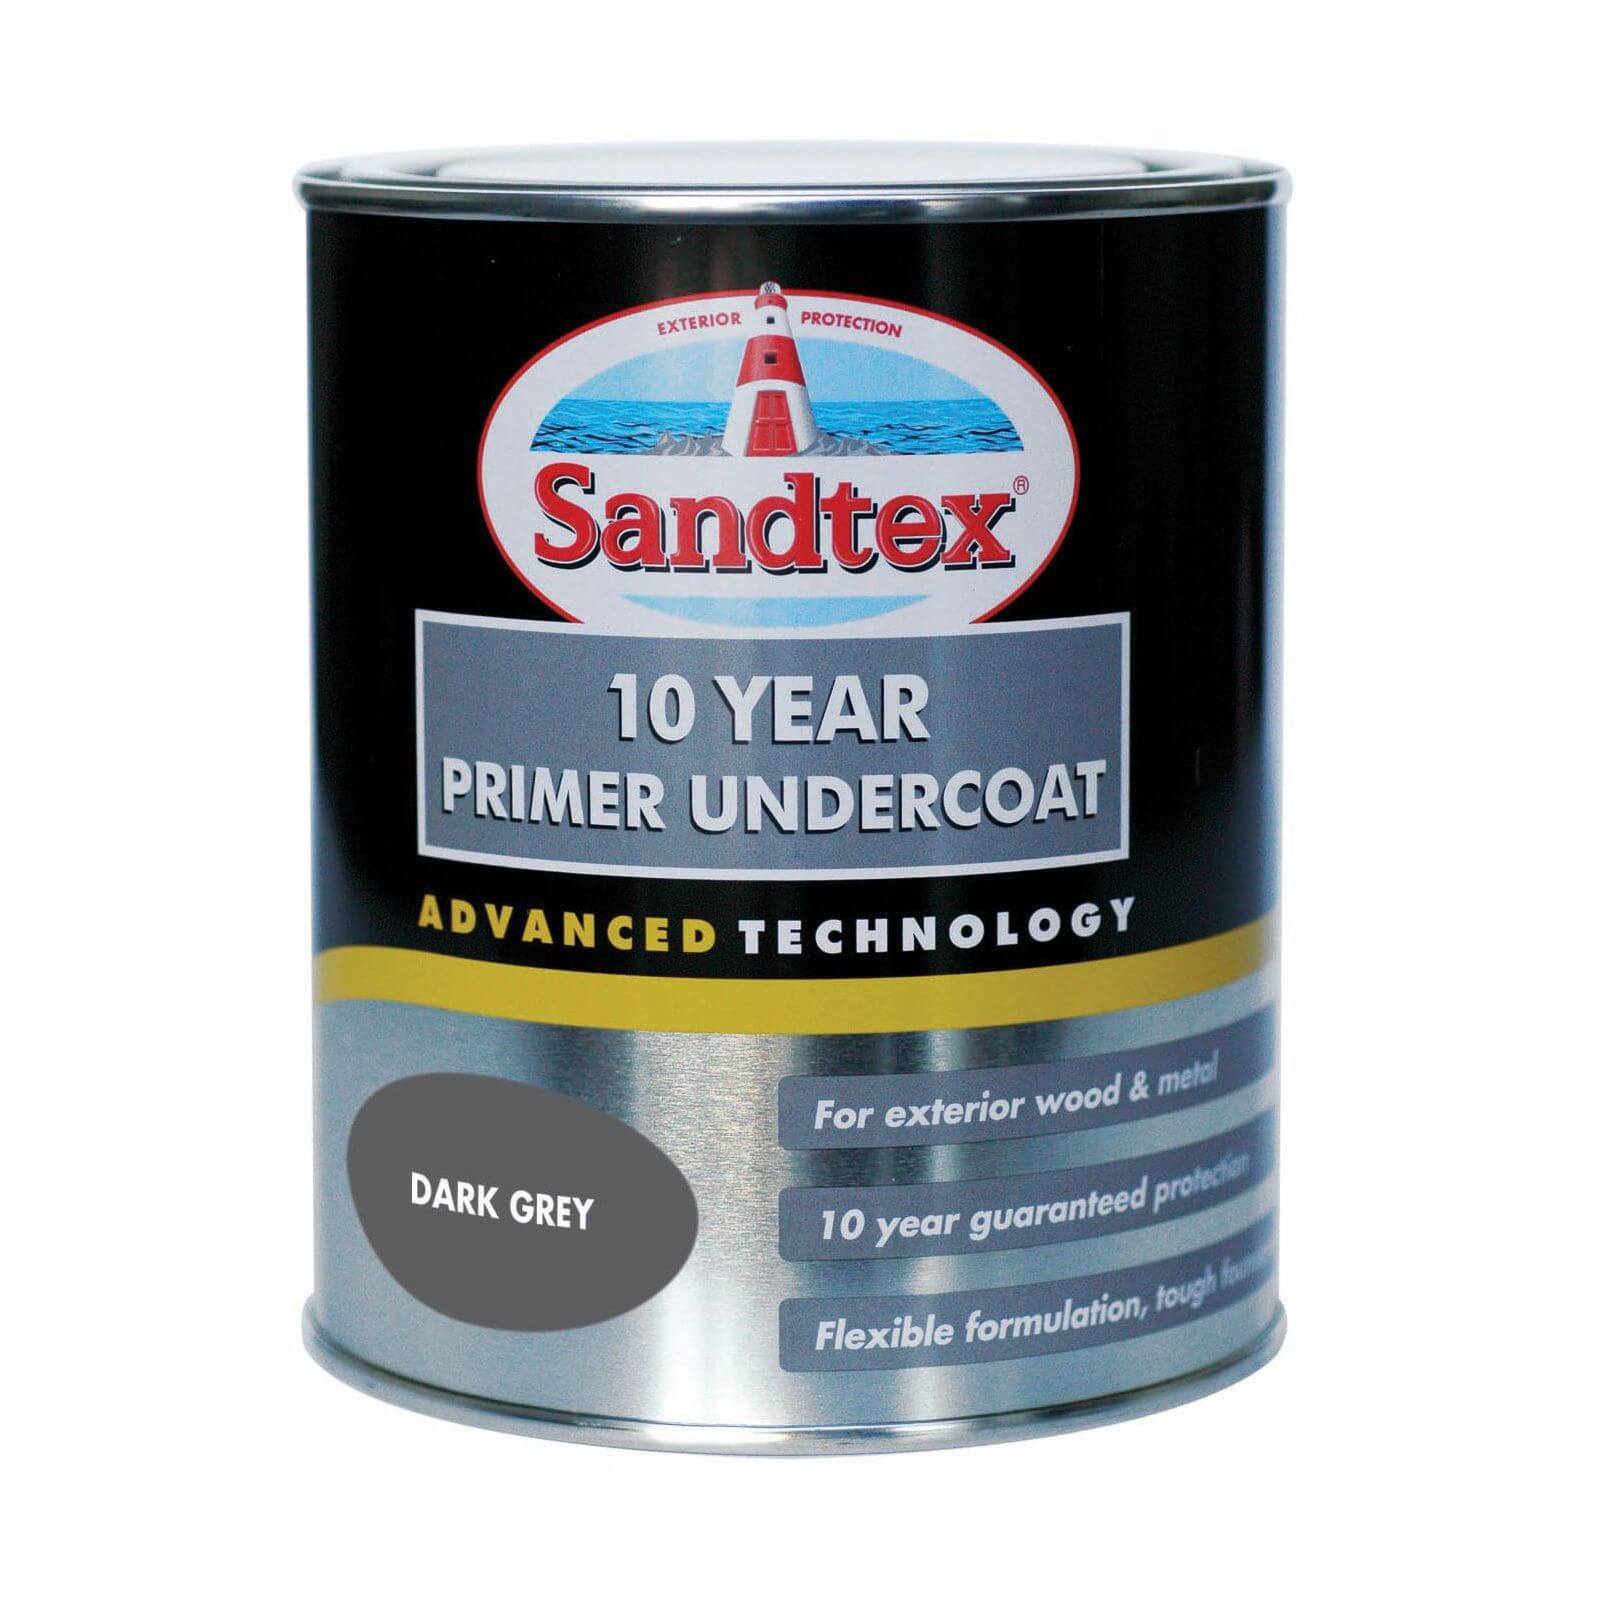 Sandtex 10 Year Primer Undercoat for Wood & Metal Dark Grey - 750ml